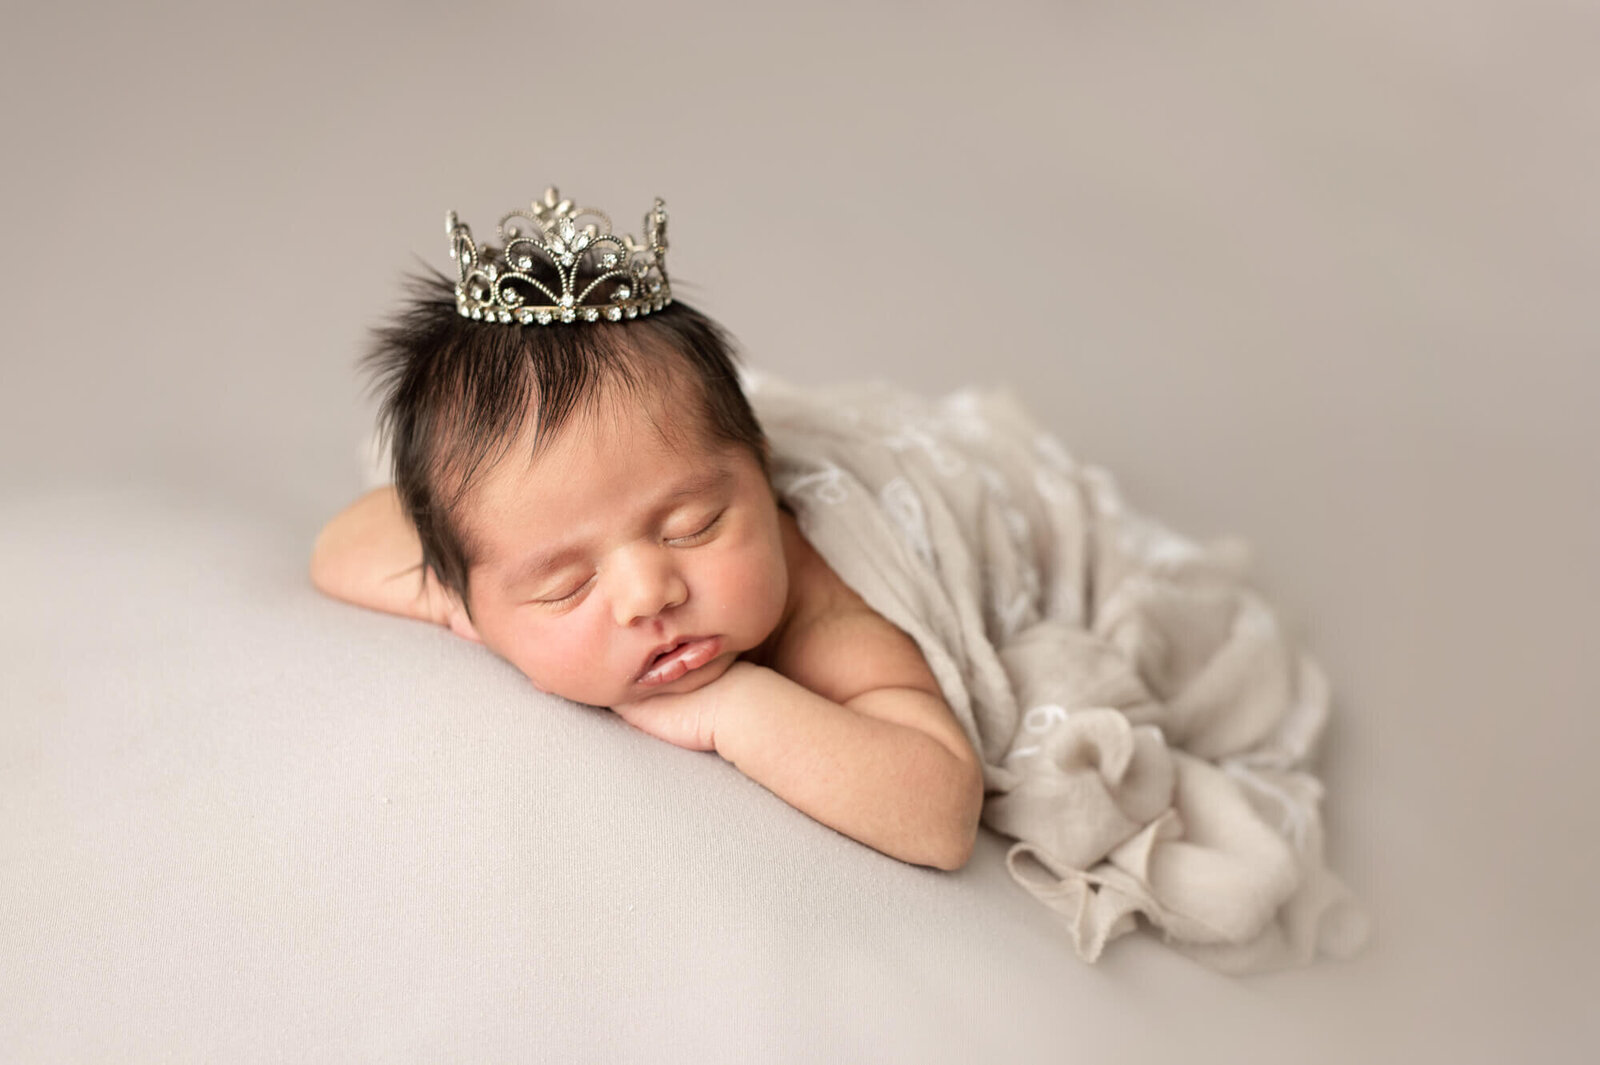 Newborn girl in silver crown